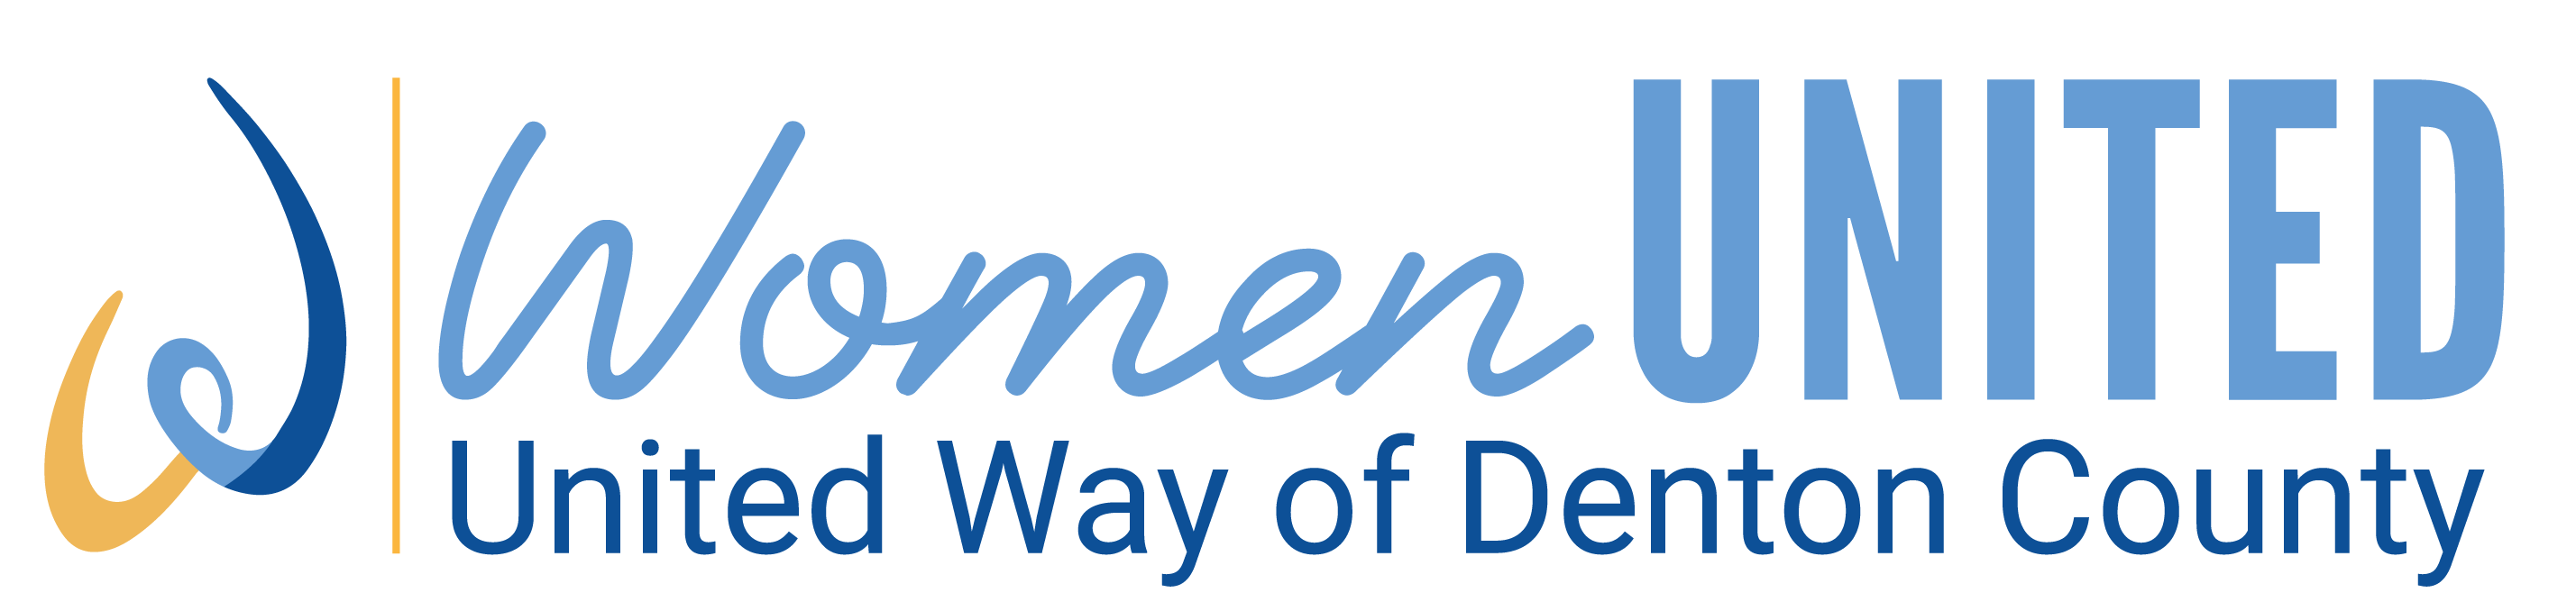 Women UNITED logo